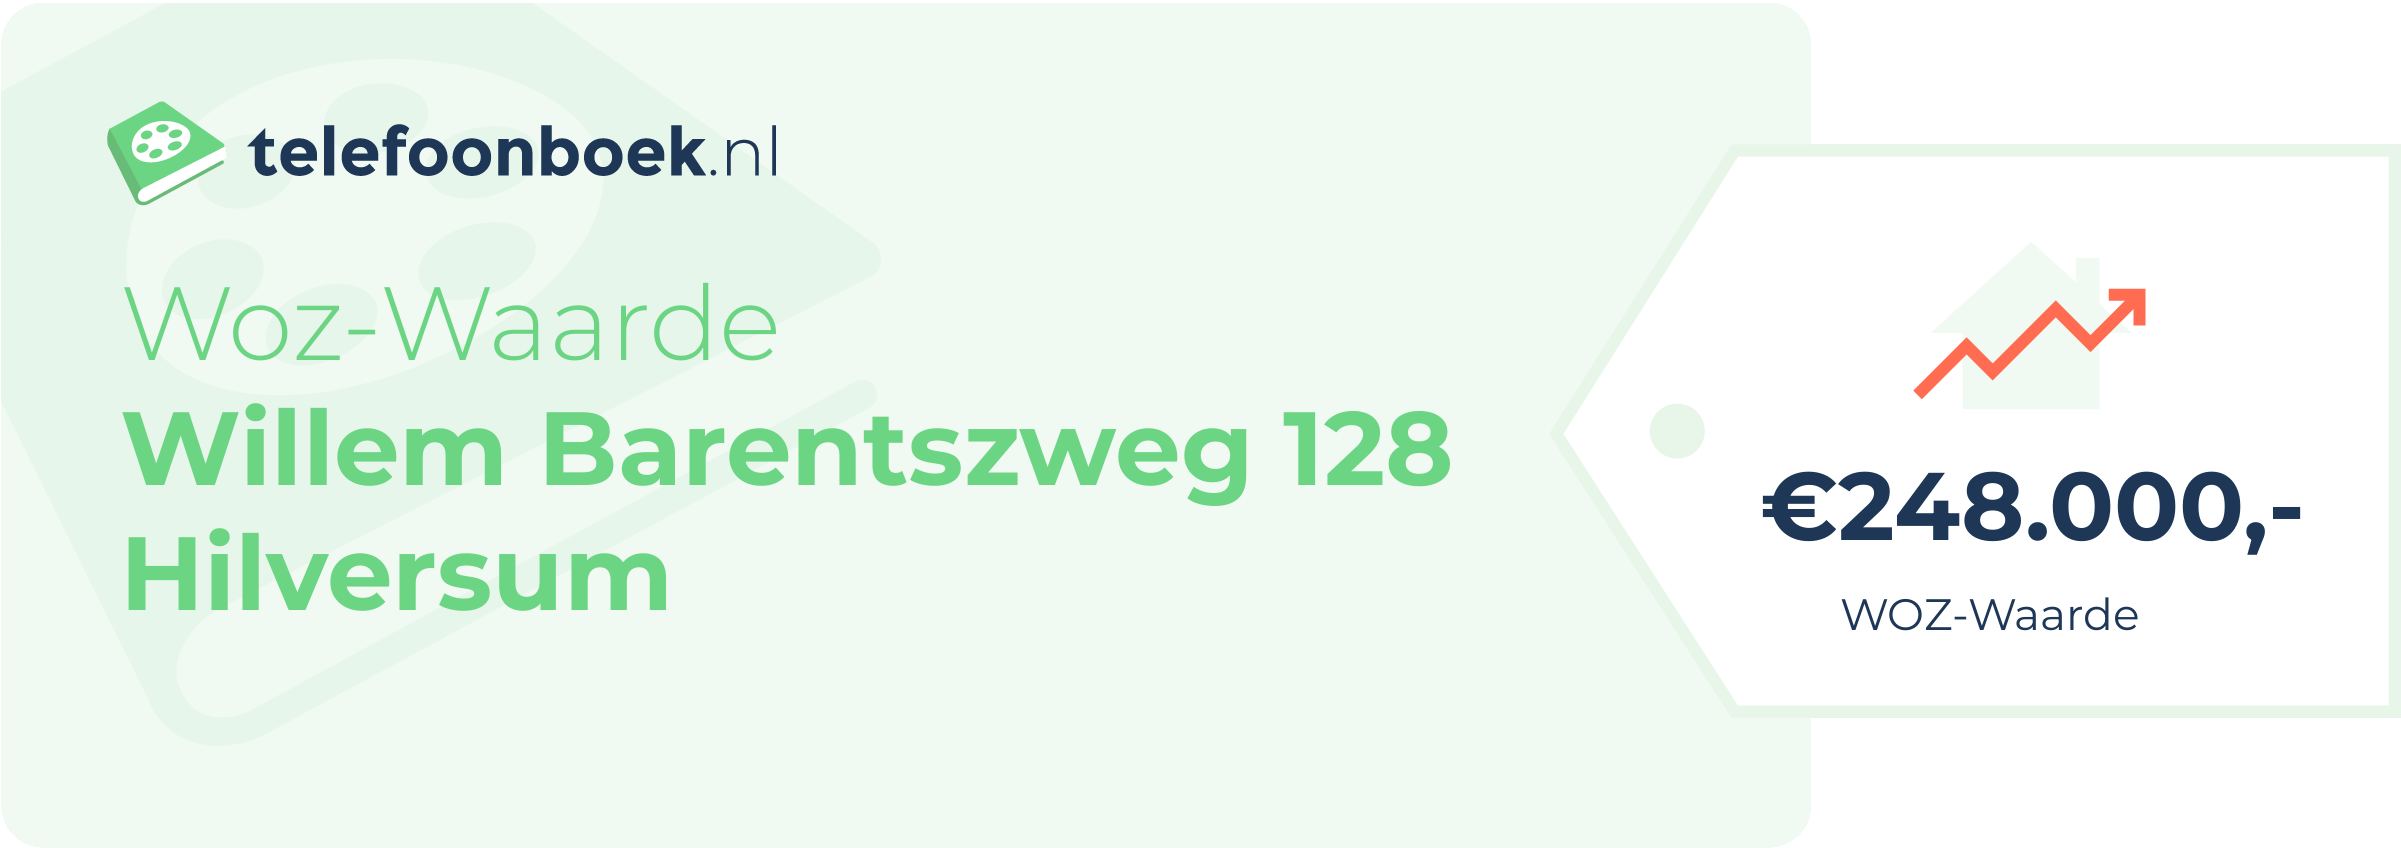 WOZ-waarde Willem Barentszweg 128 Hilversum